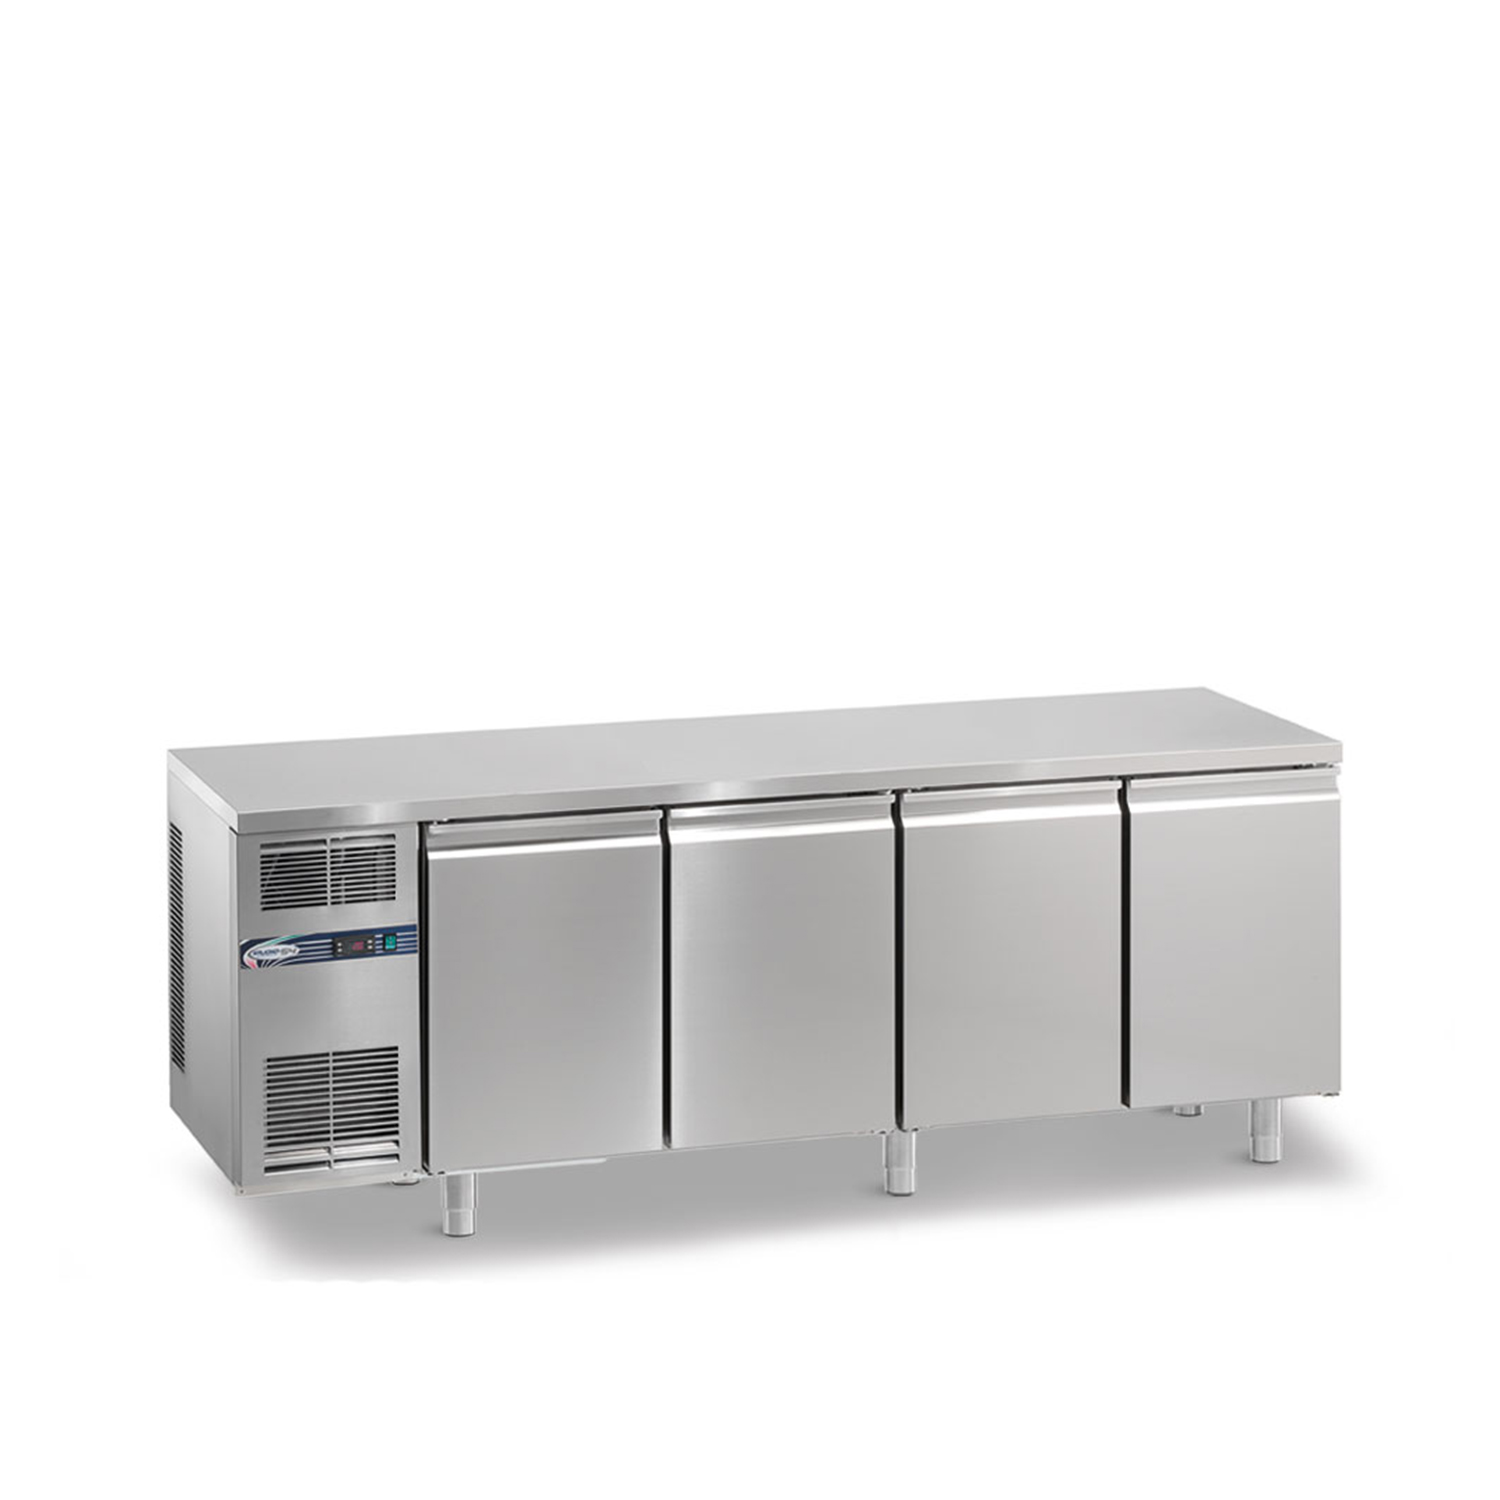 Tiefkühltisch DAIQUIRI Top Line H660 GN 1/1, B 2200  x T 700 x H 850 mm, 4 Kühlfächer, Arbeitsplatte